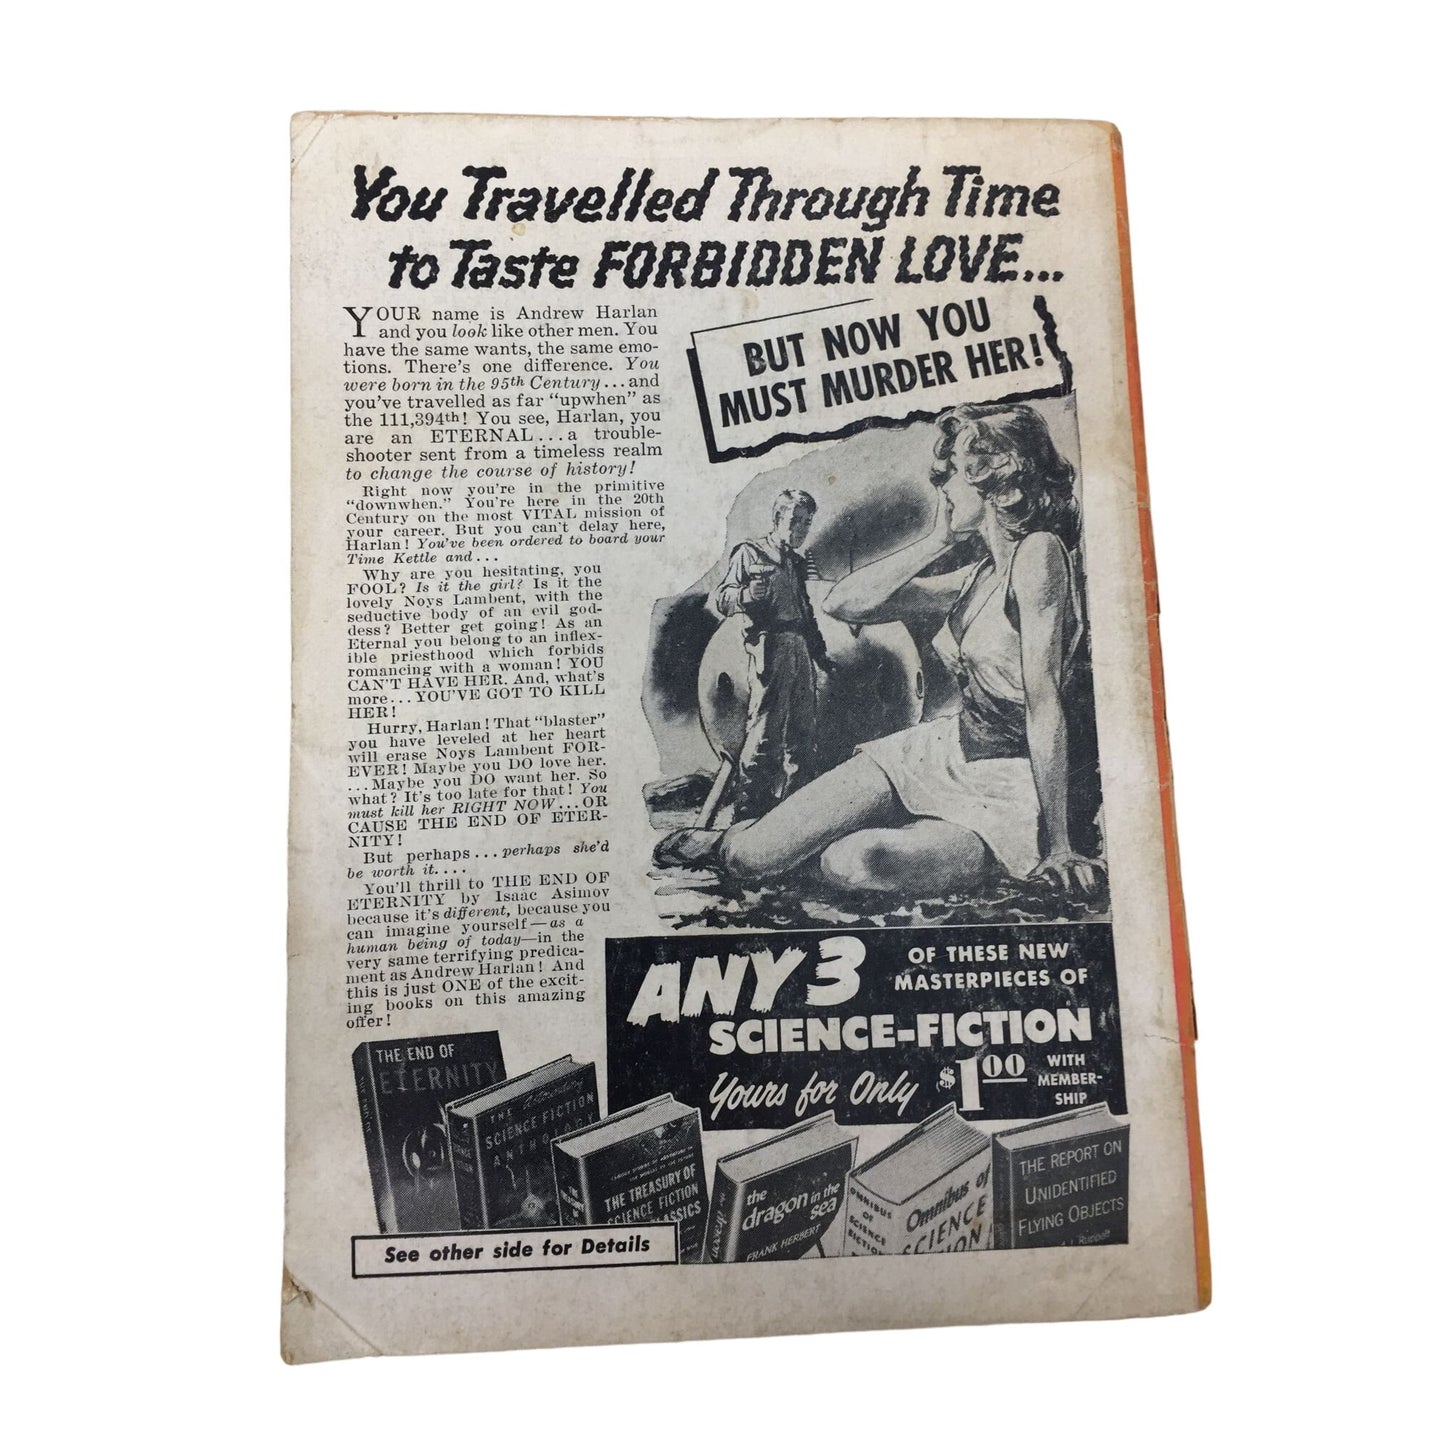 Vintage January 1958 Star Science Fiction Magazine edited by Frederik Pohl